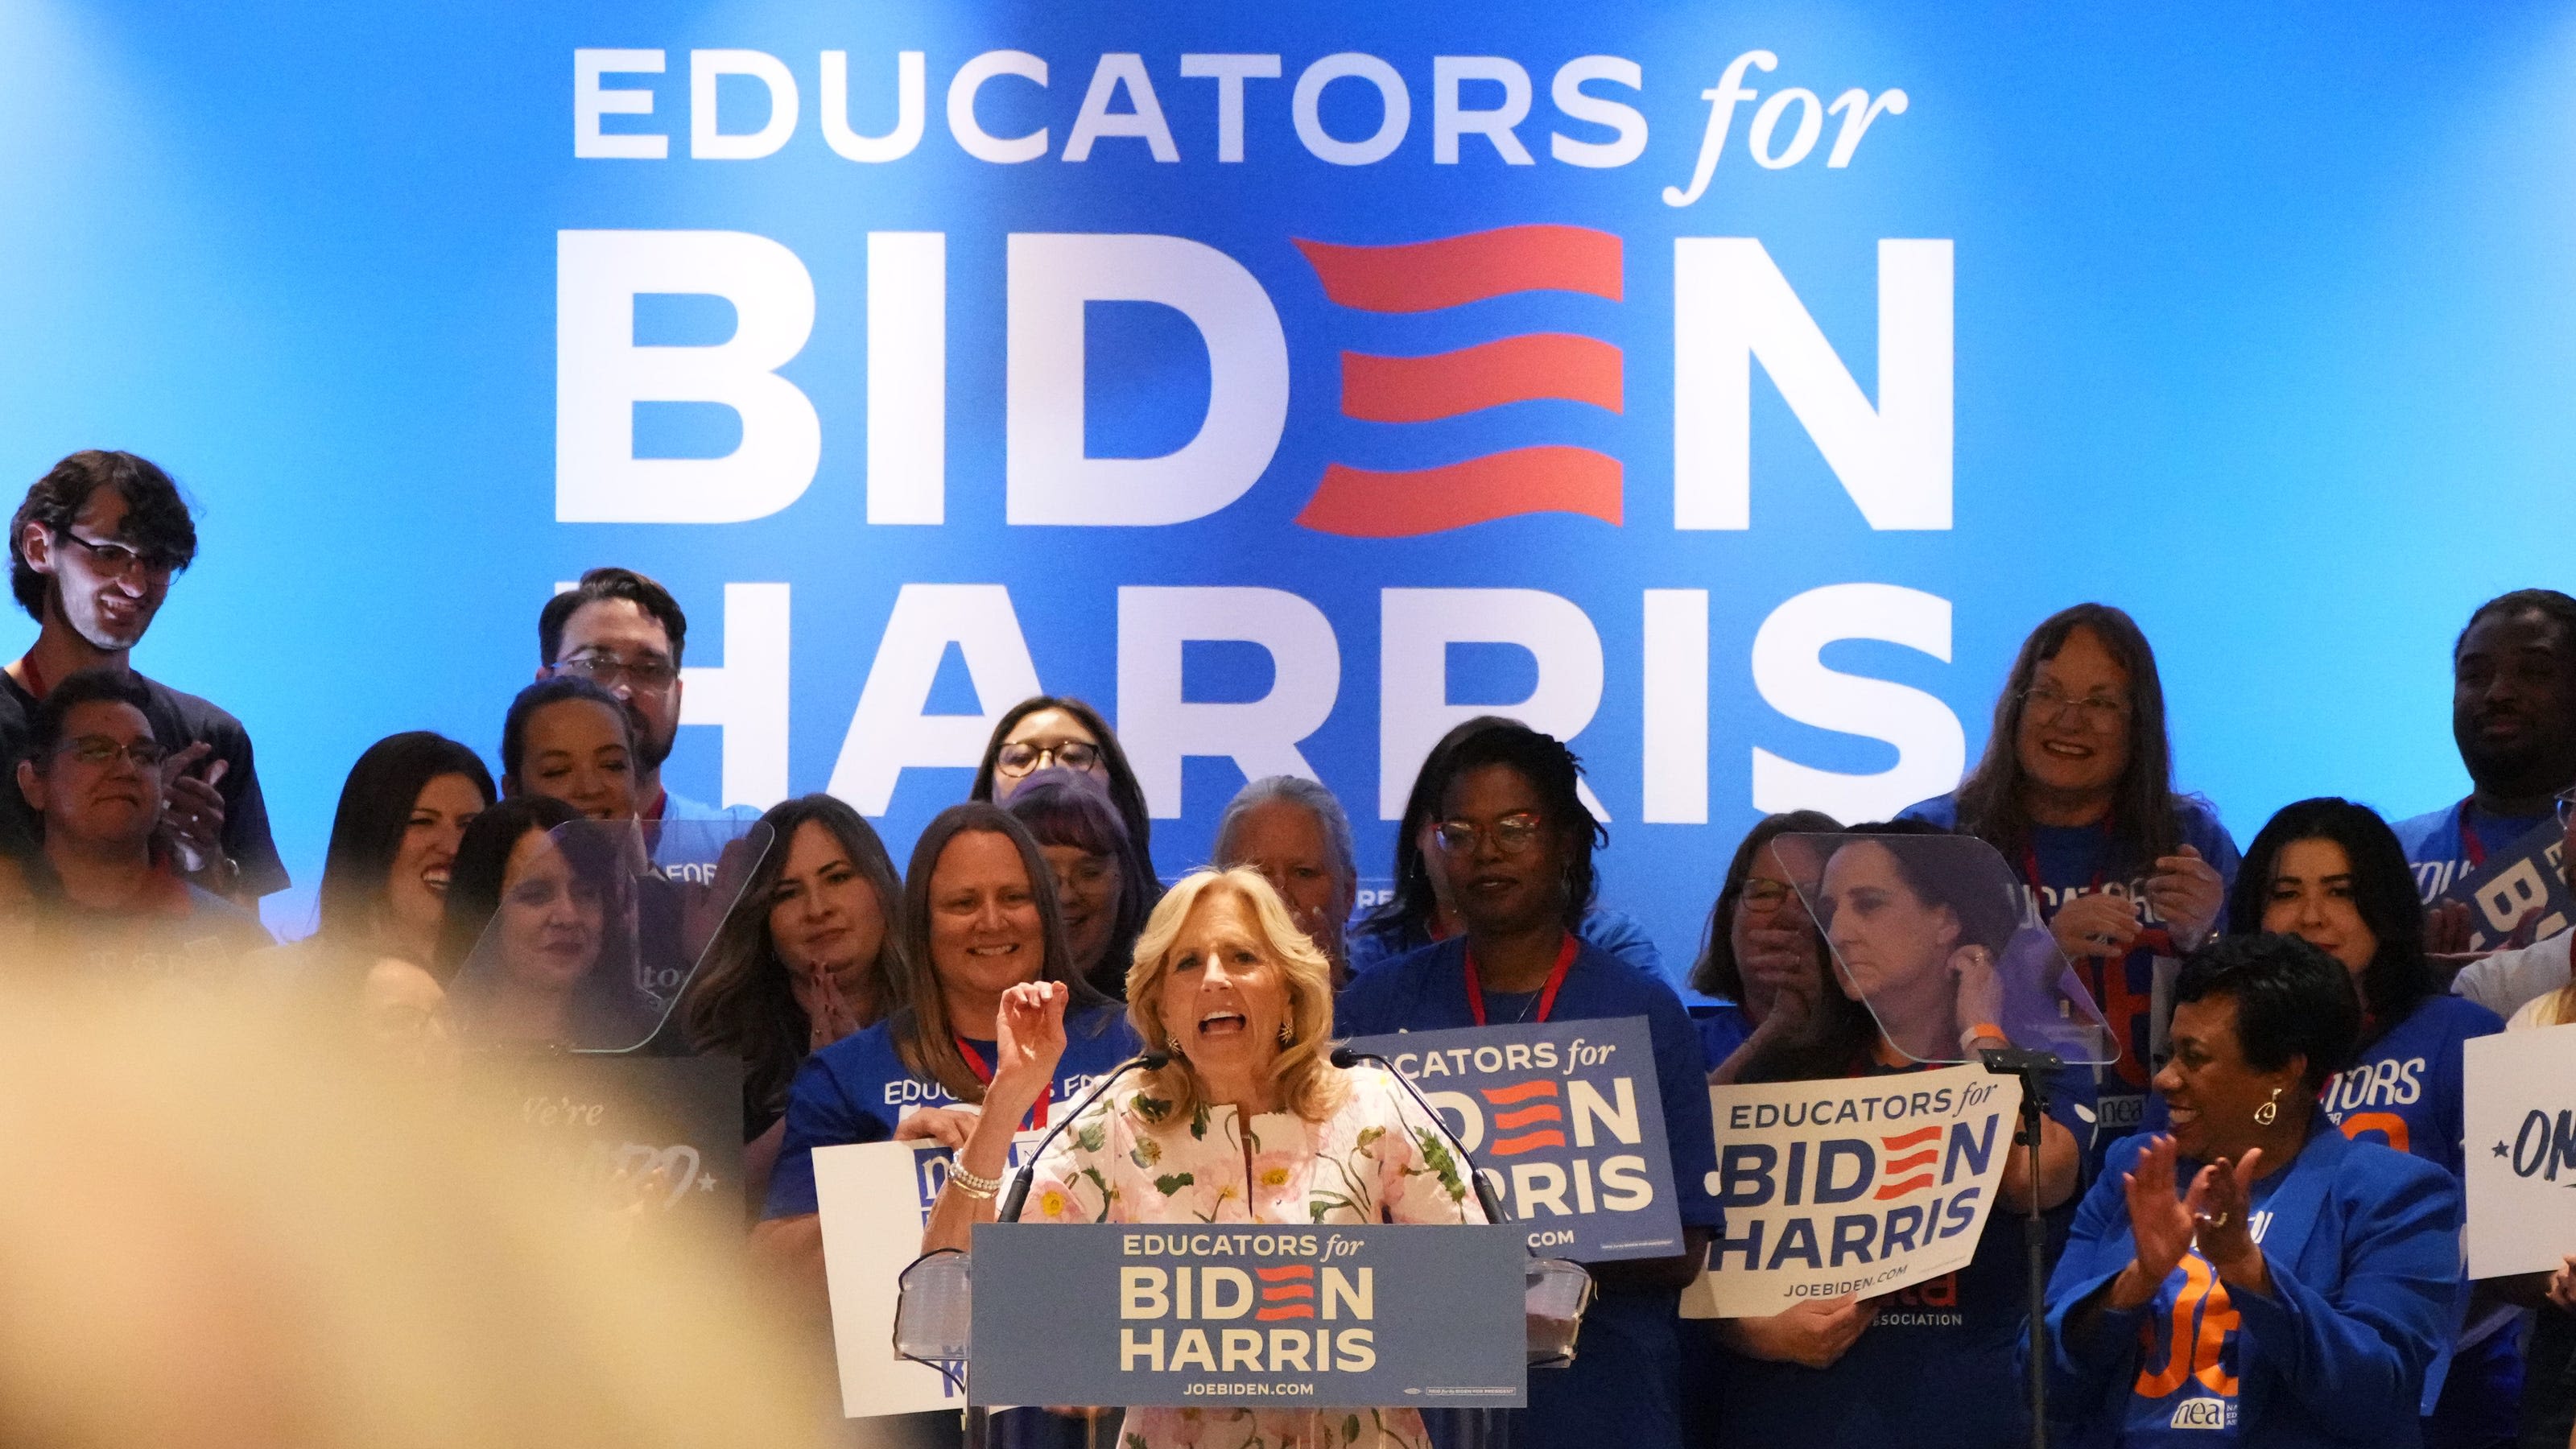 Trump would make US education system less fair, first lady Jill Biden argues in Phoenix